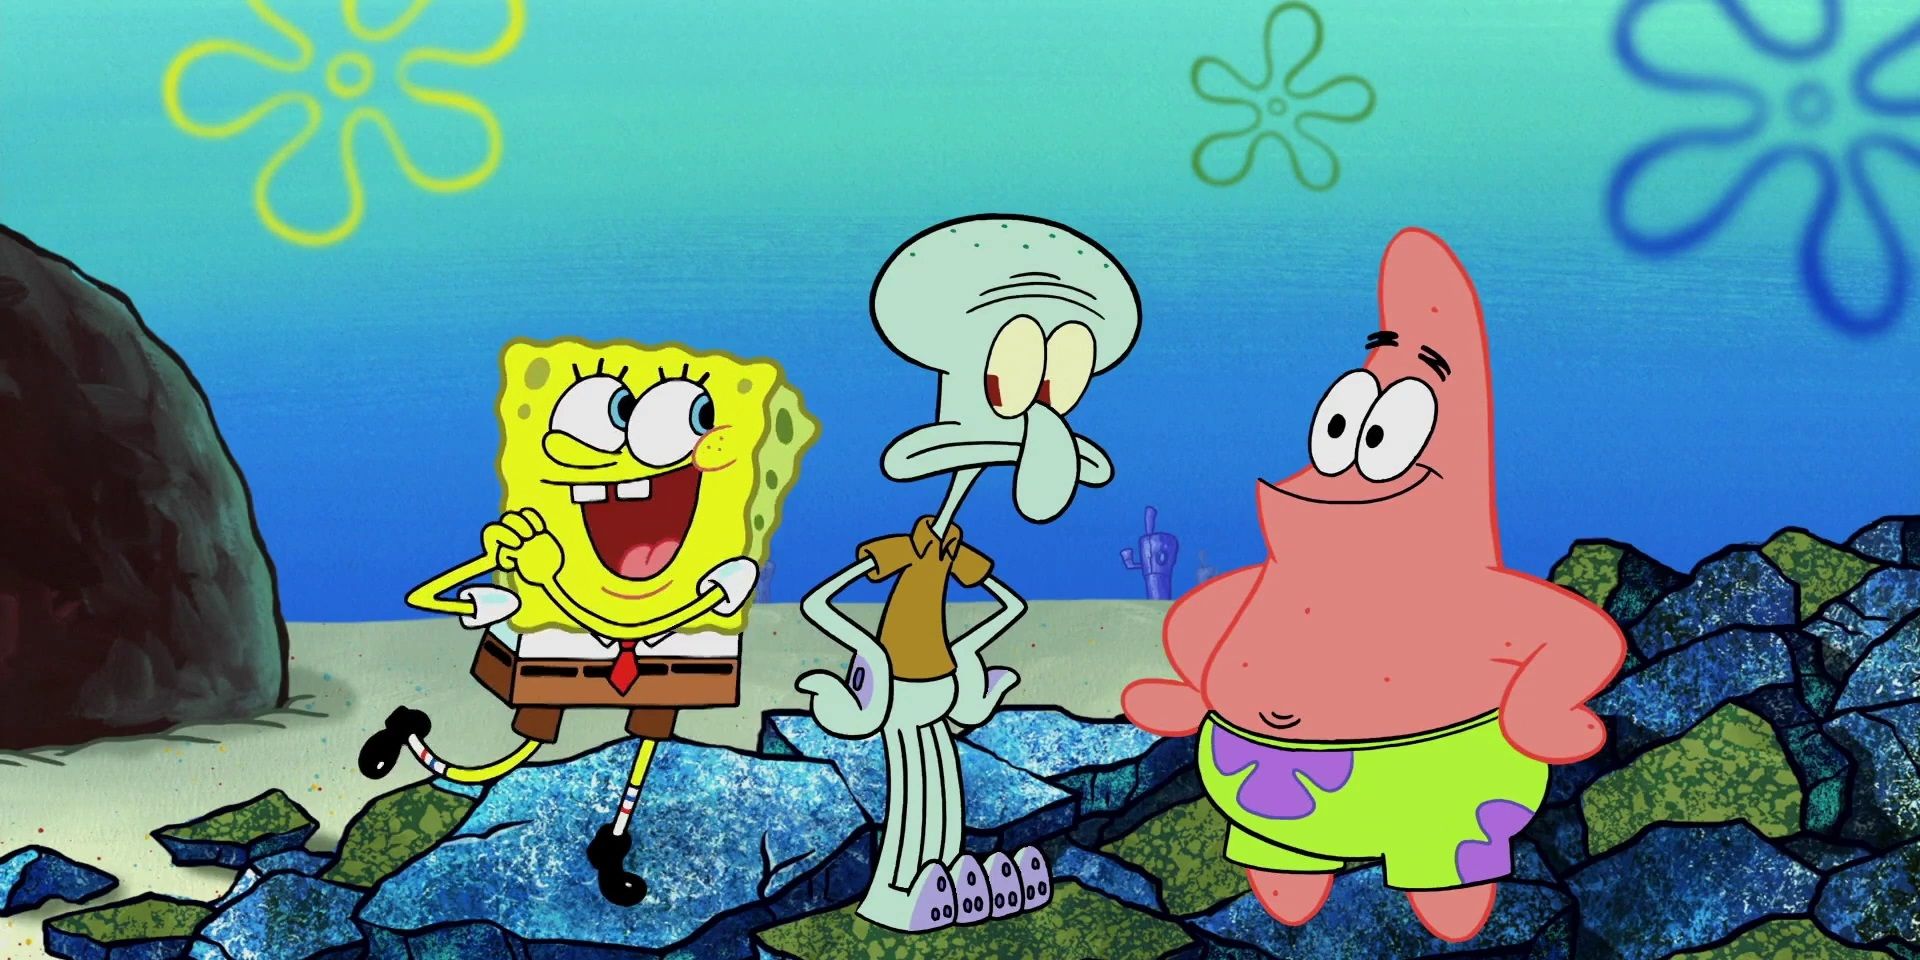 spongebob patrick and squidward